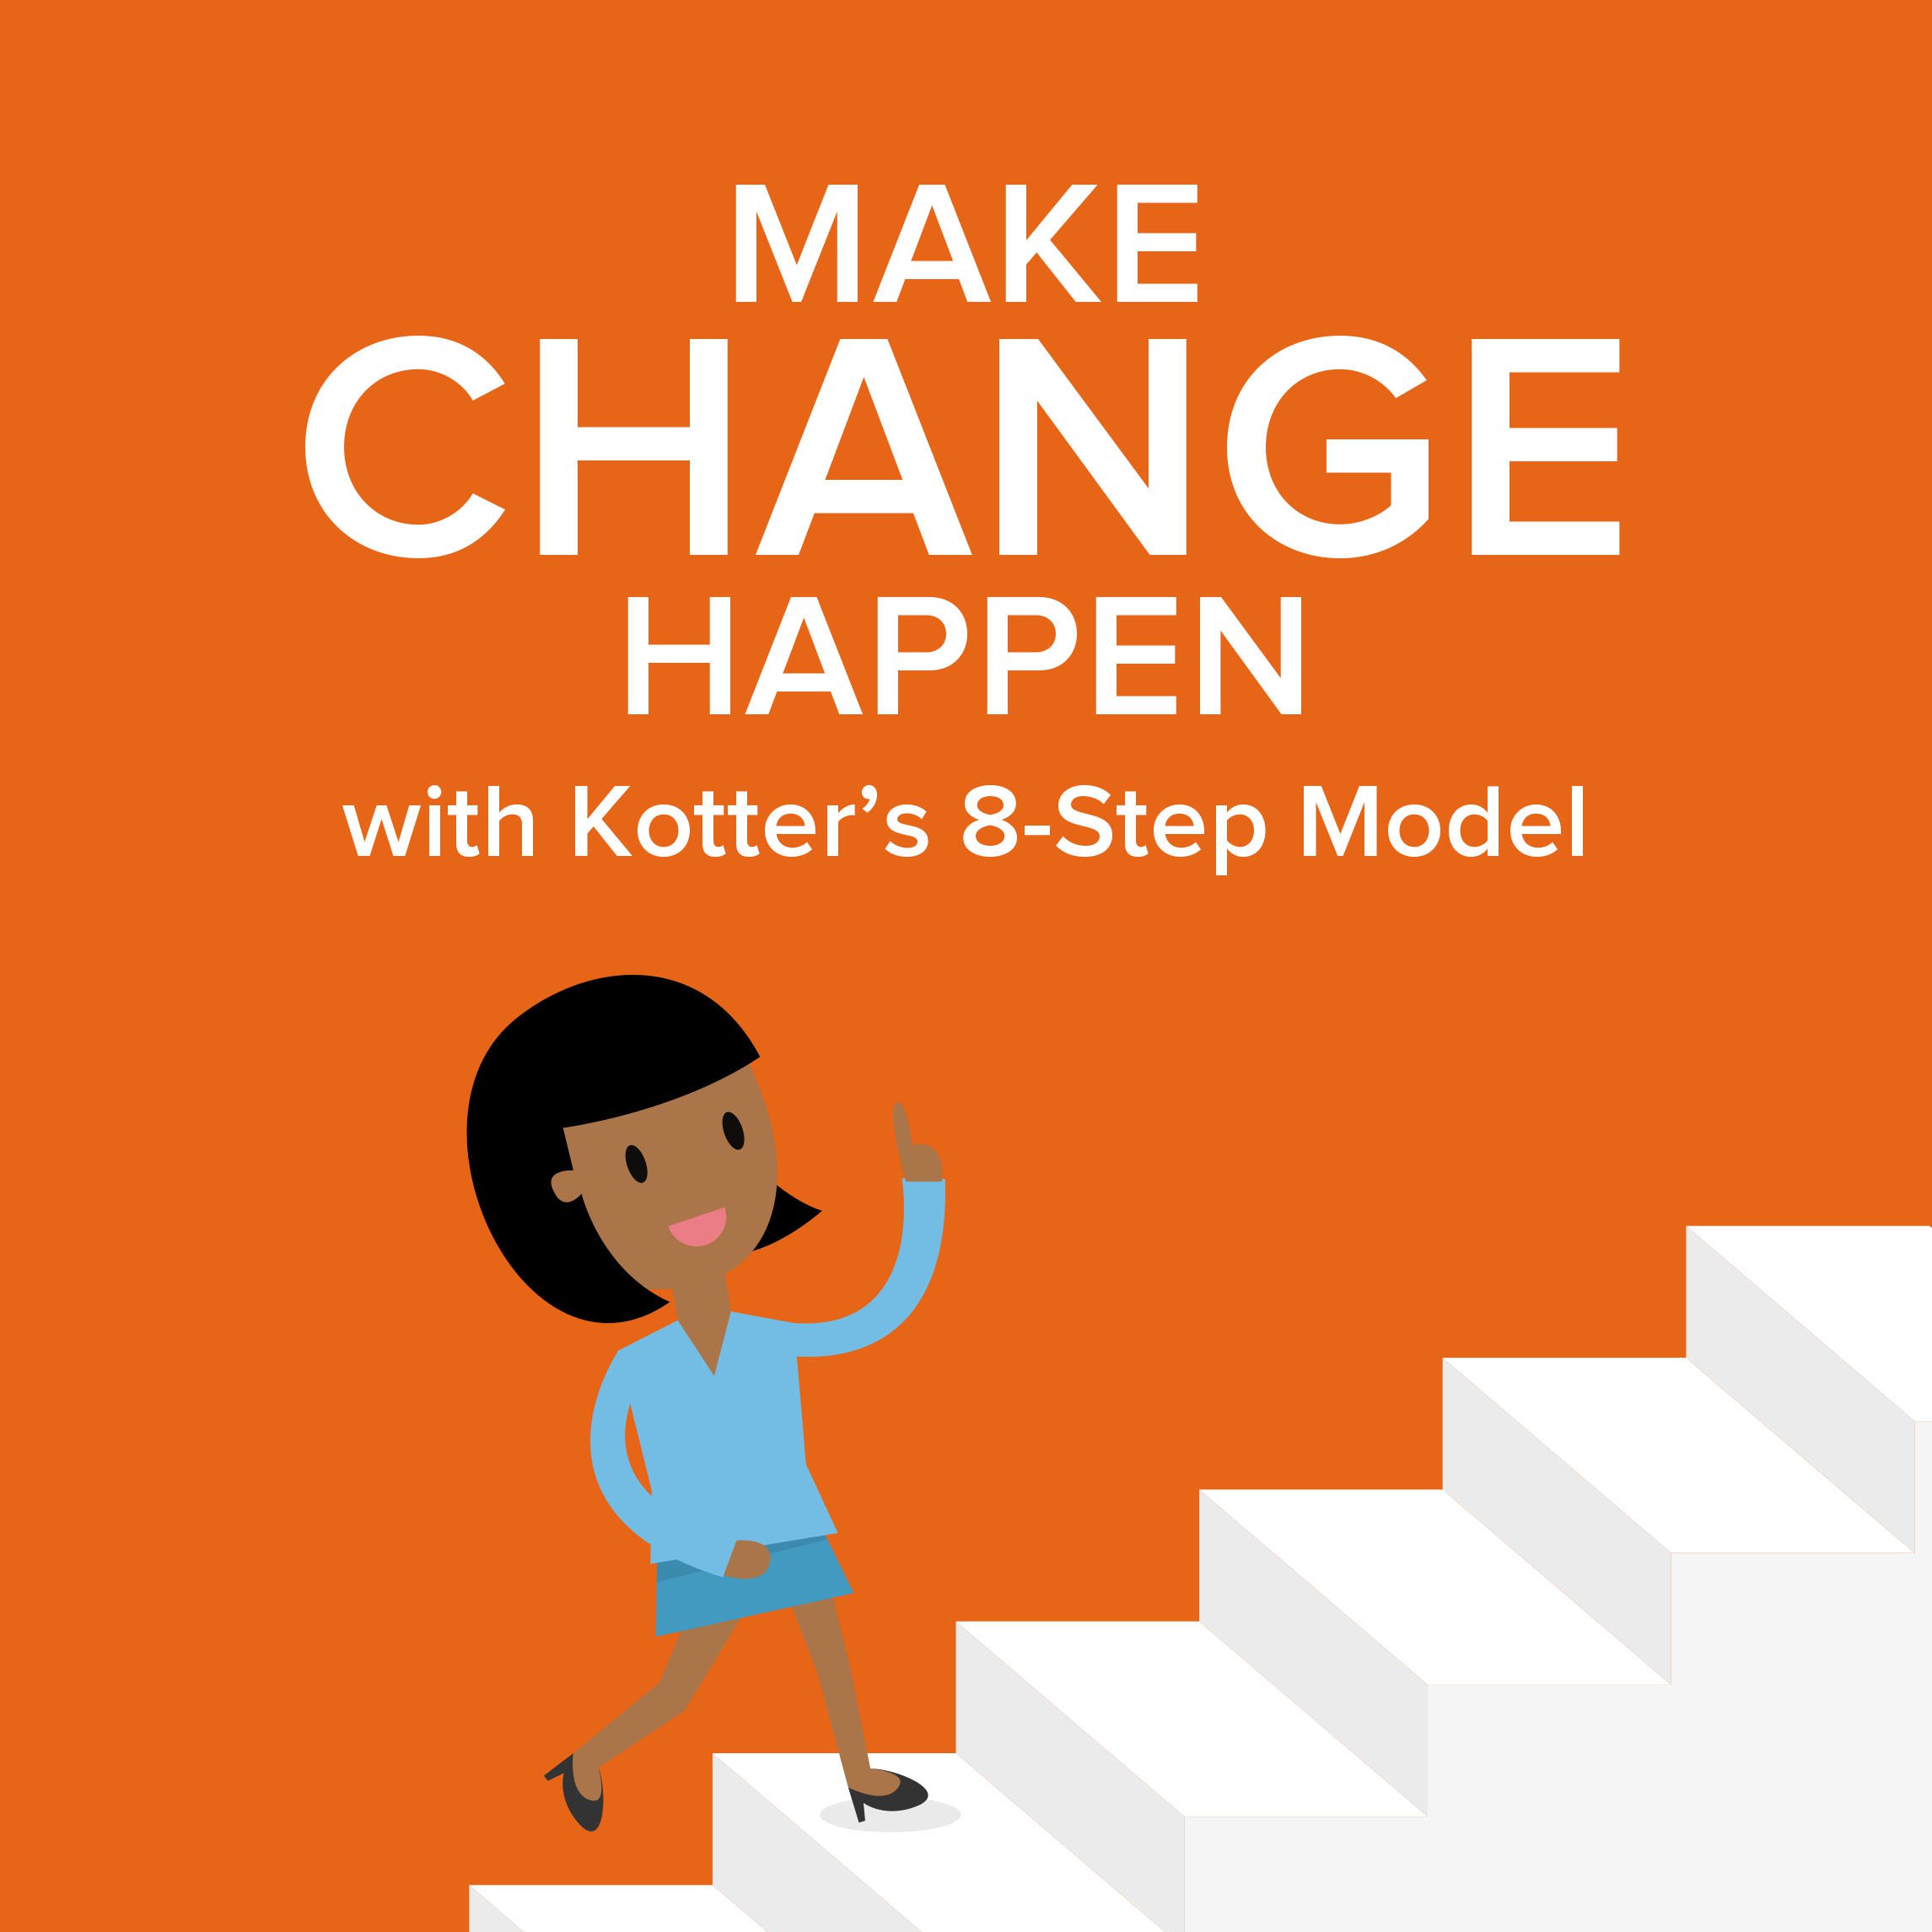 Kotter's 8-Step Change Model - Change Management Tools from Mind Tools